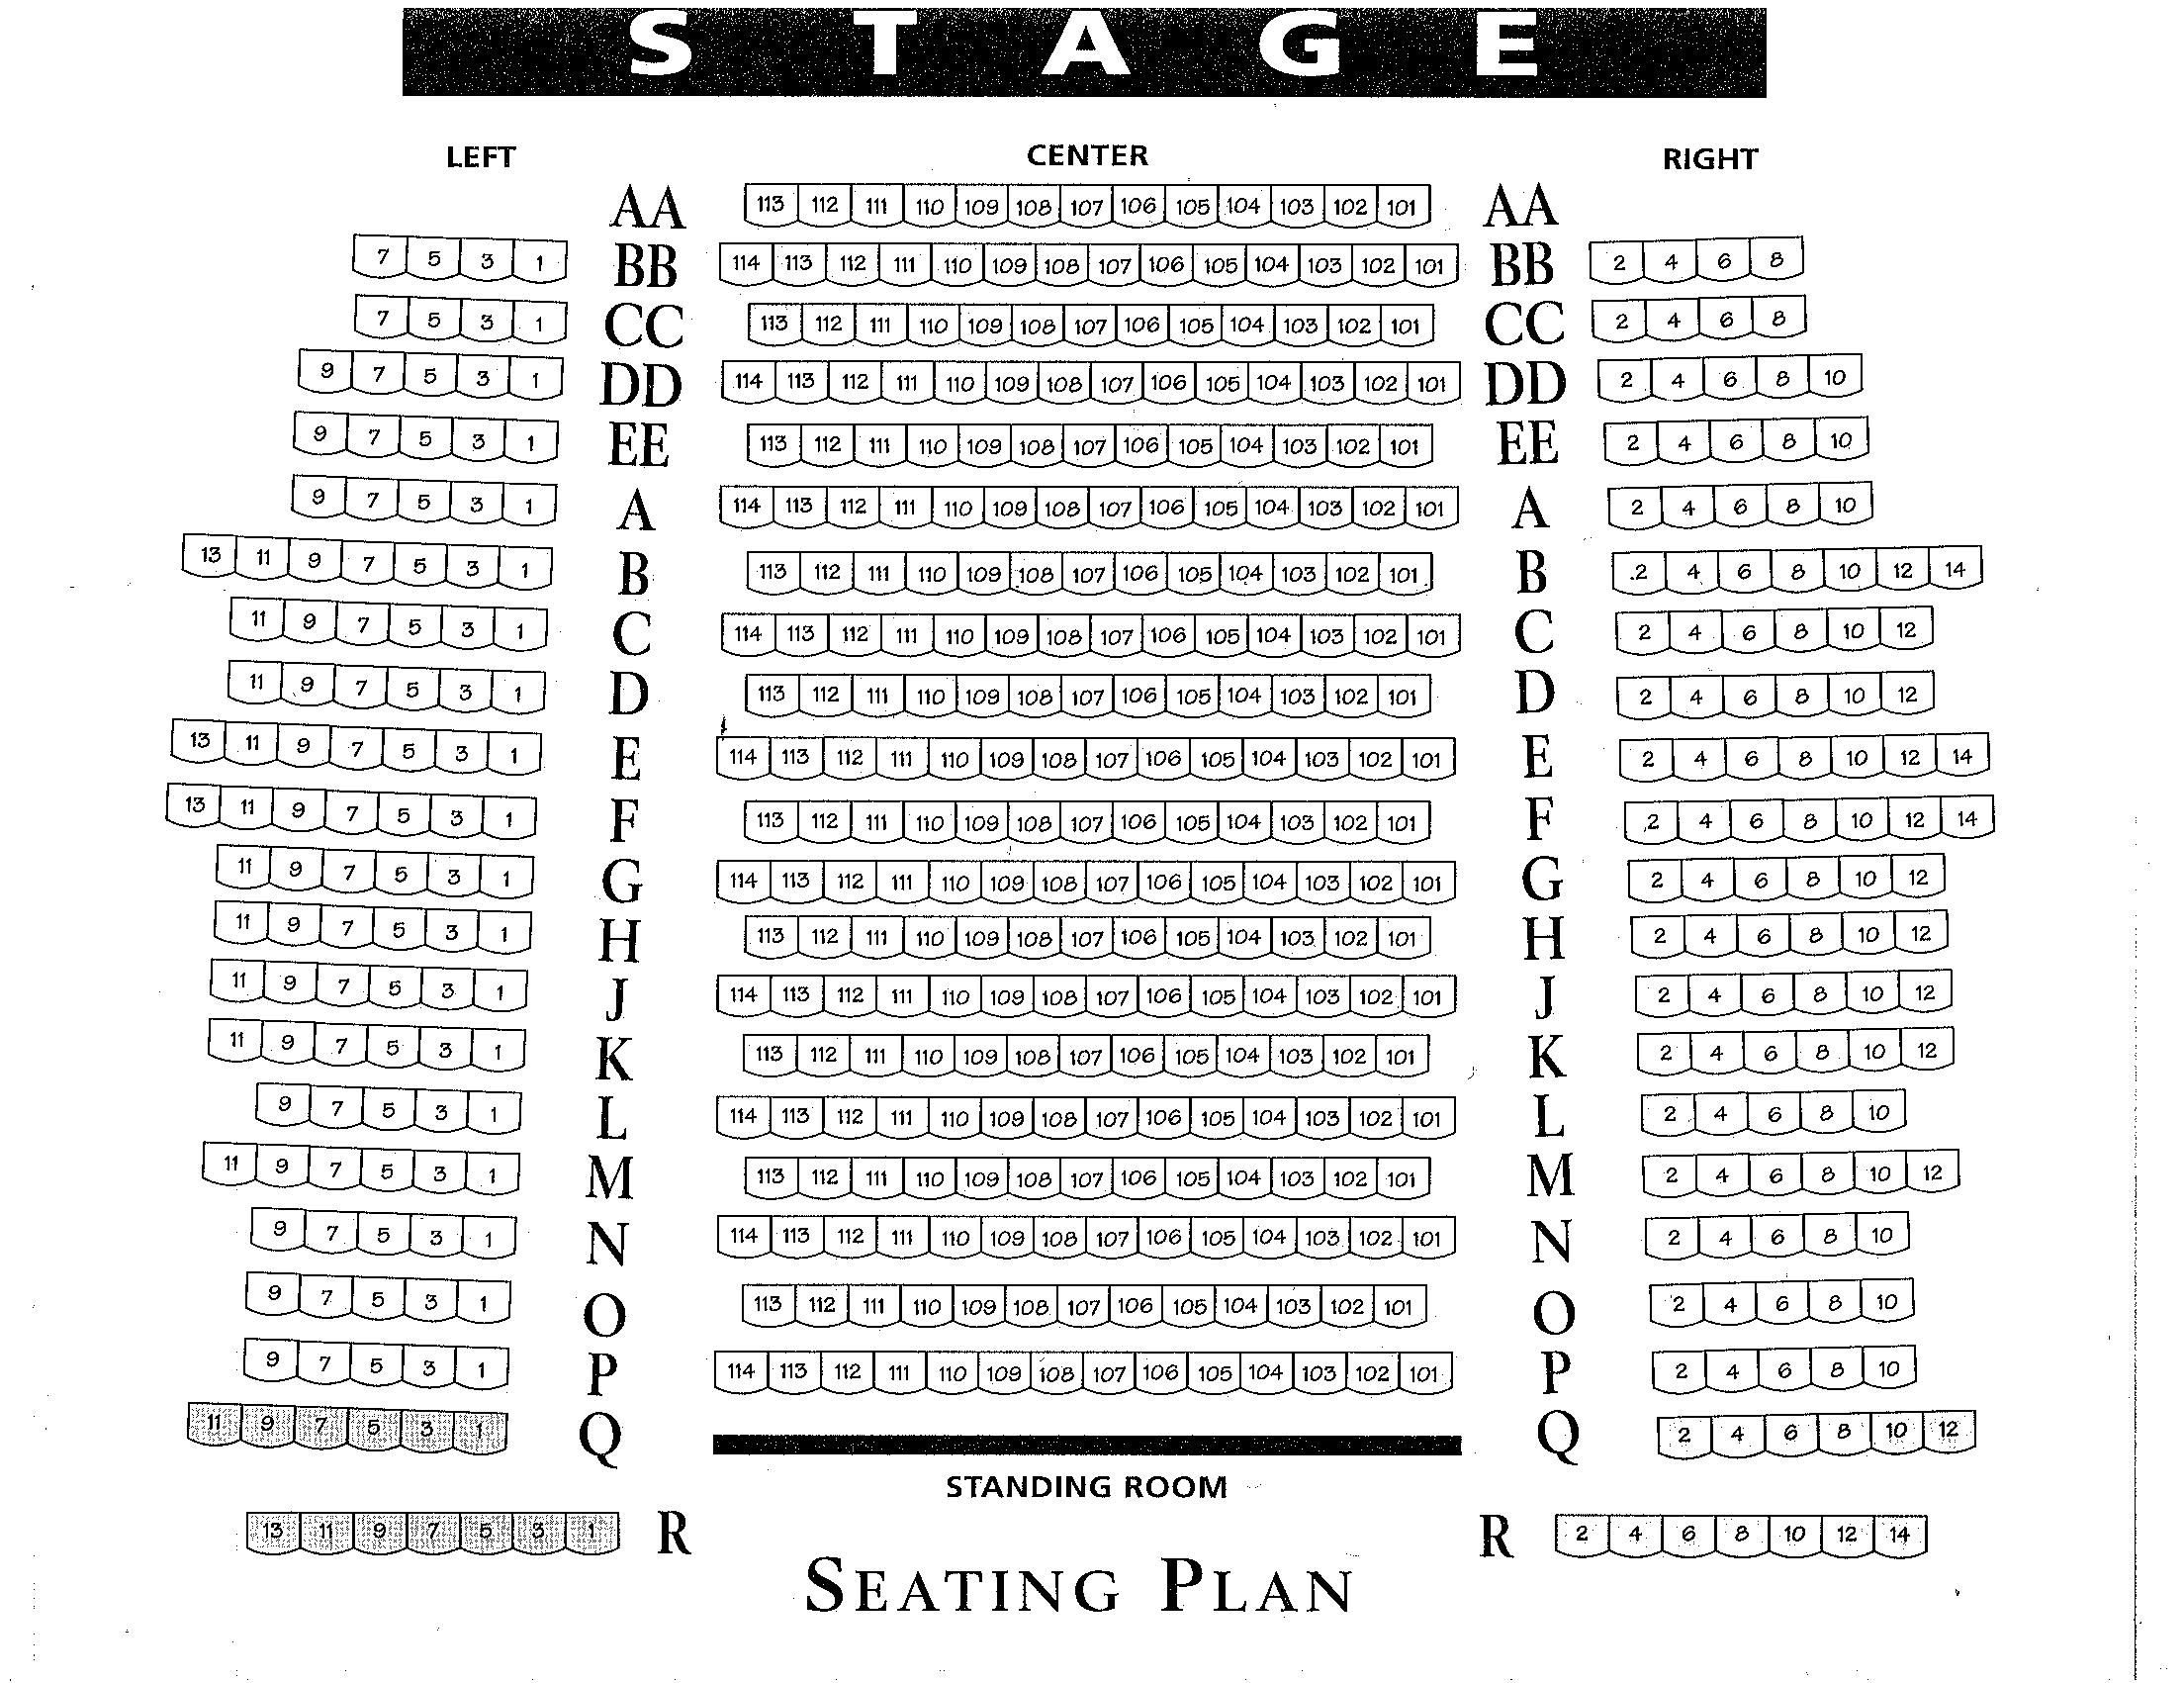 Gateway Playhouse Seating Chart